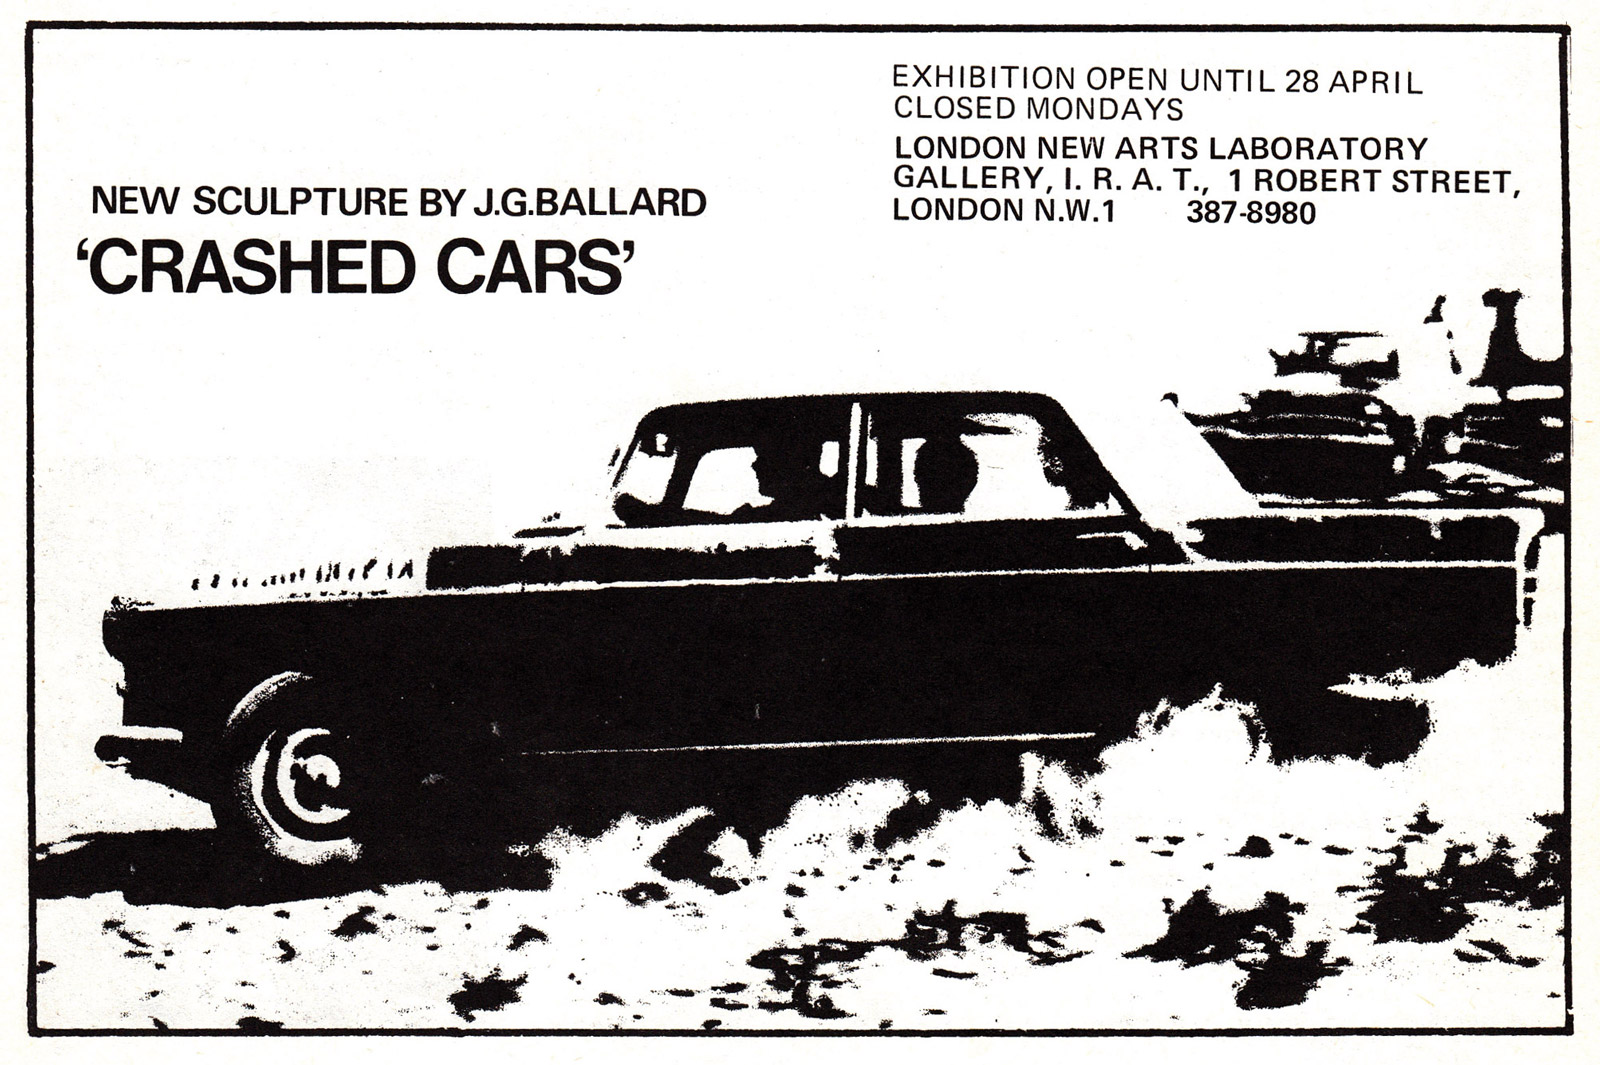 A nineteen seventy print advertisement for J.G. Ballard’s sculpture exhibition “Crashed Cars” at London New Arts Laboratory. 